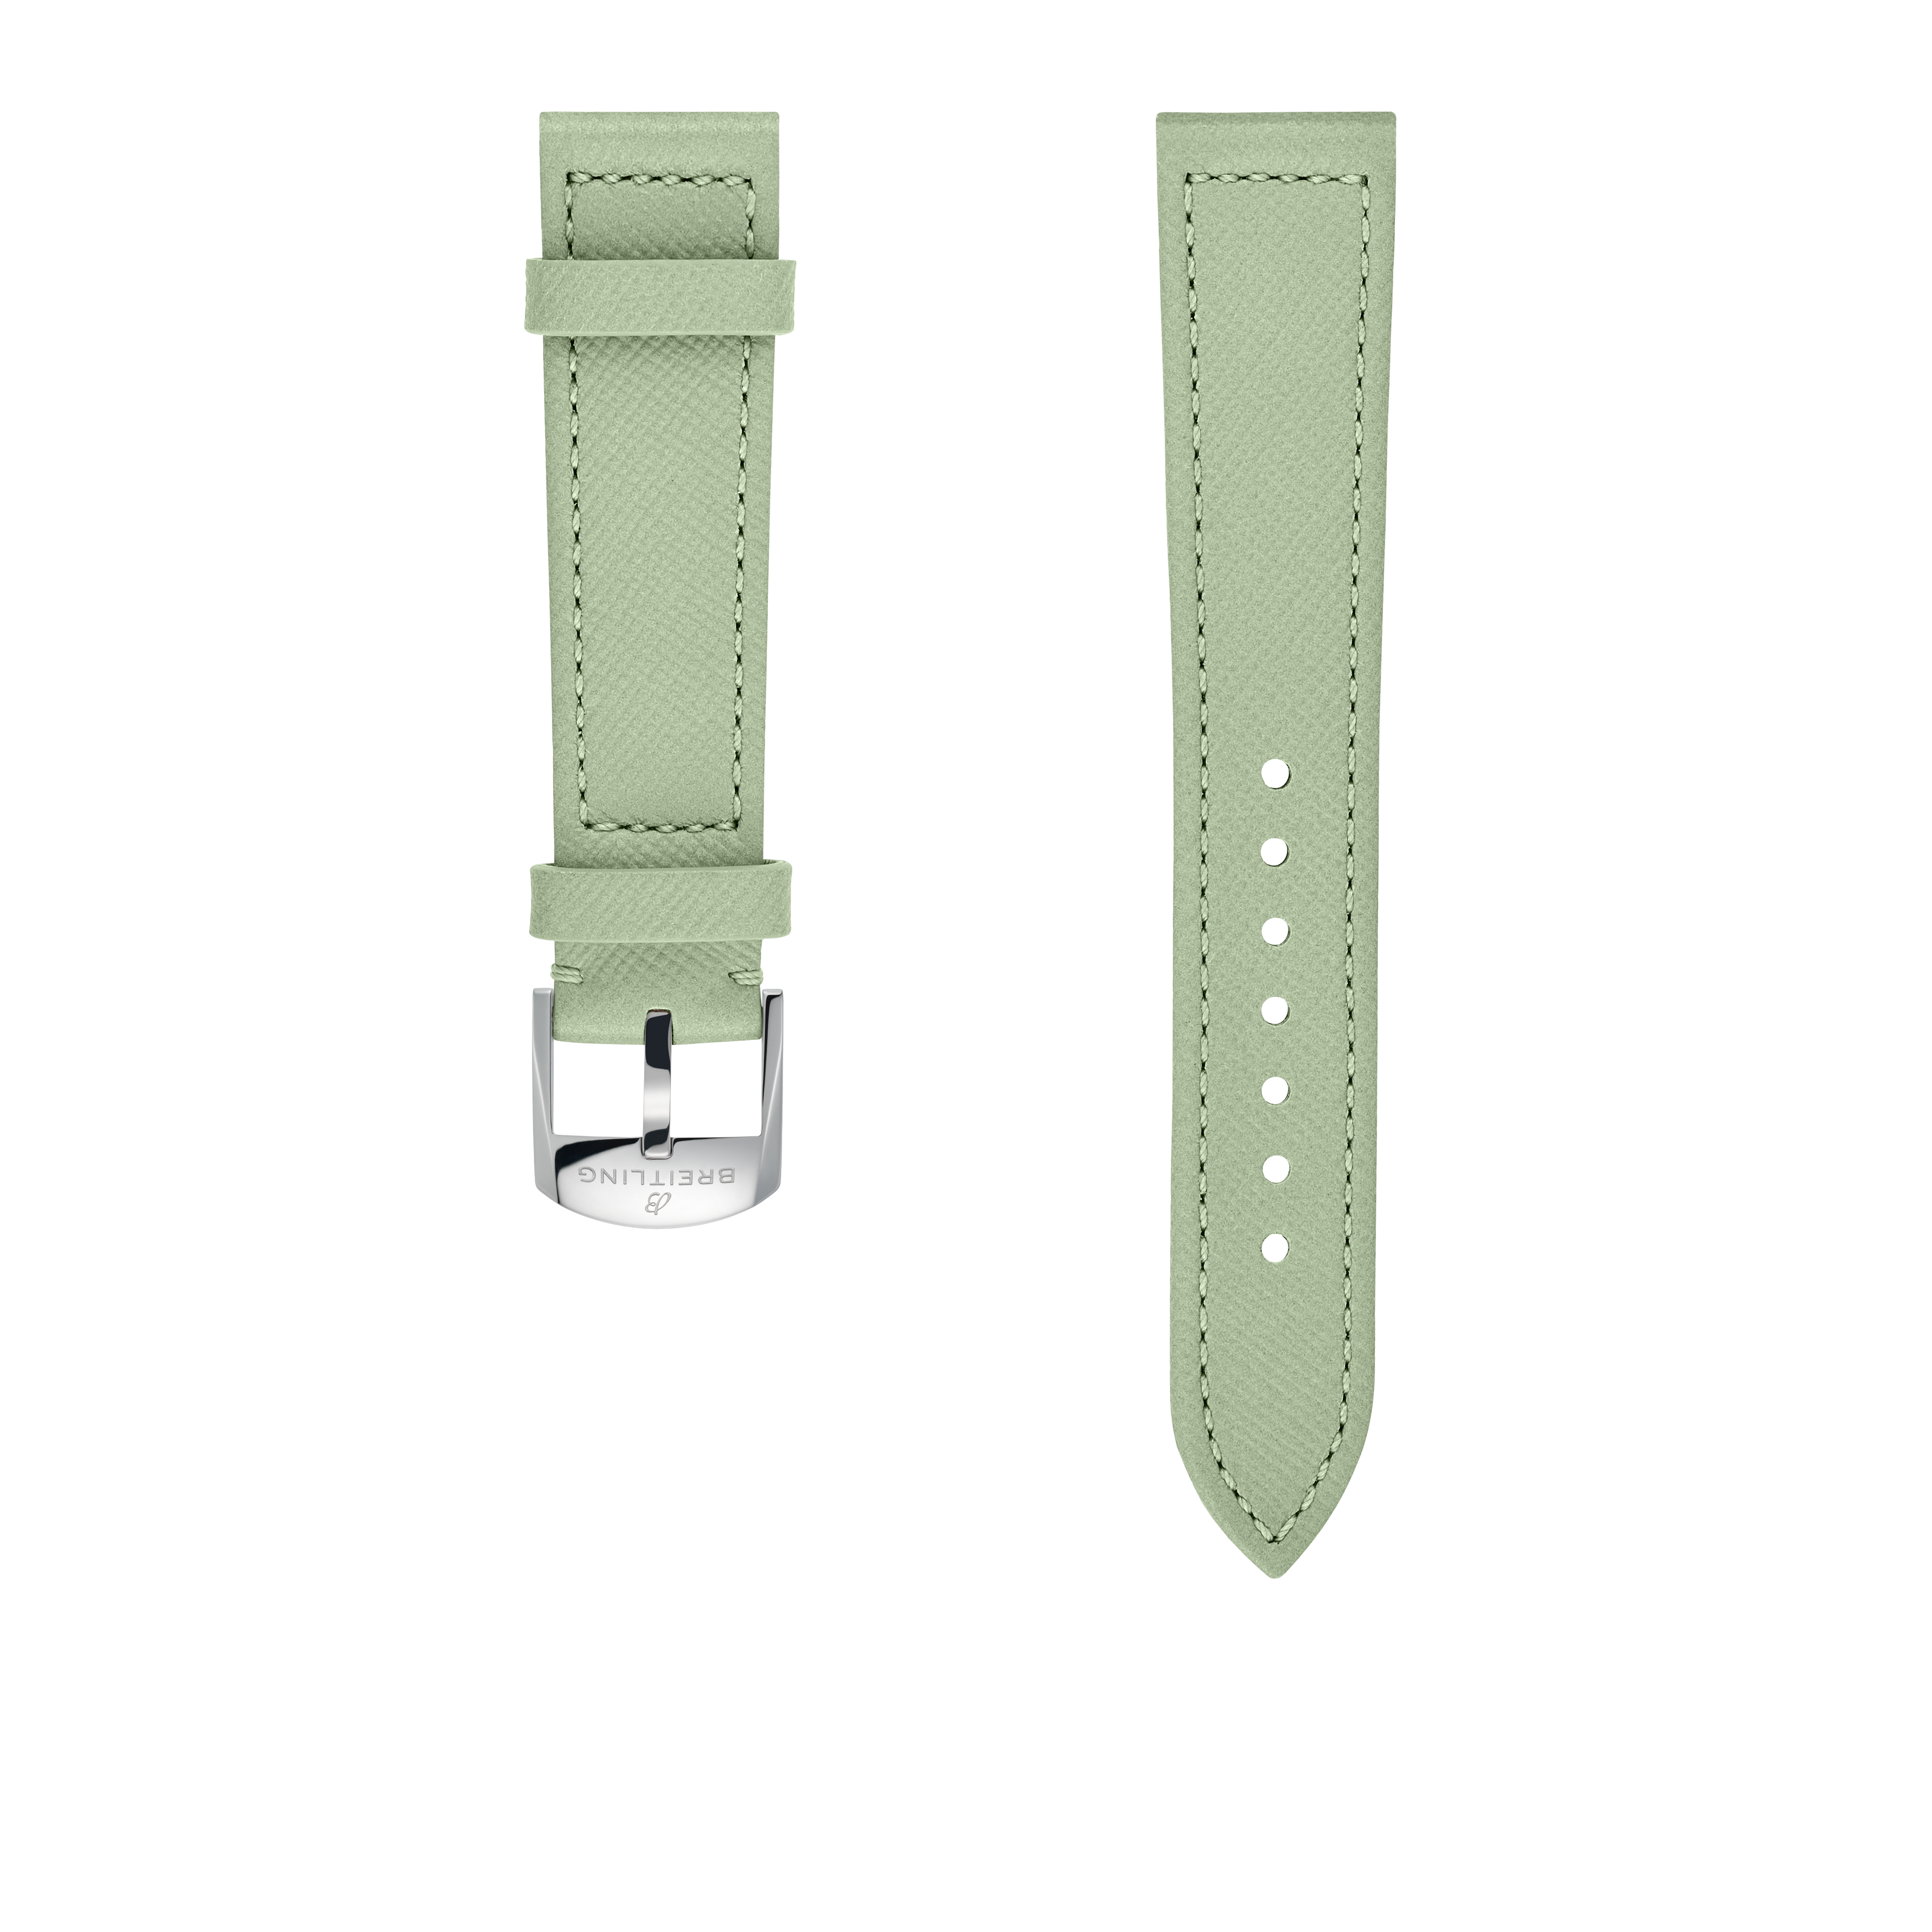 Mint green calfskin leather strap - 18 mm